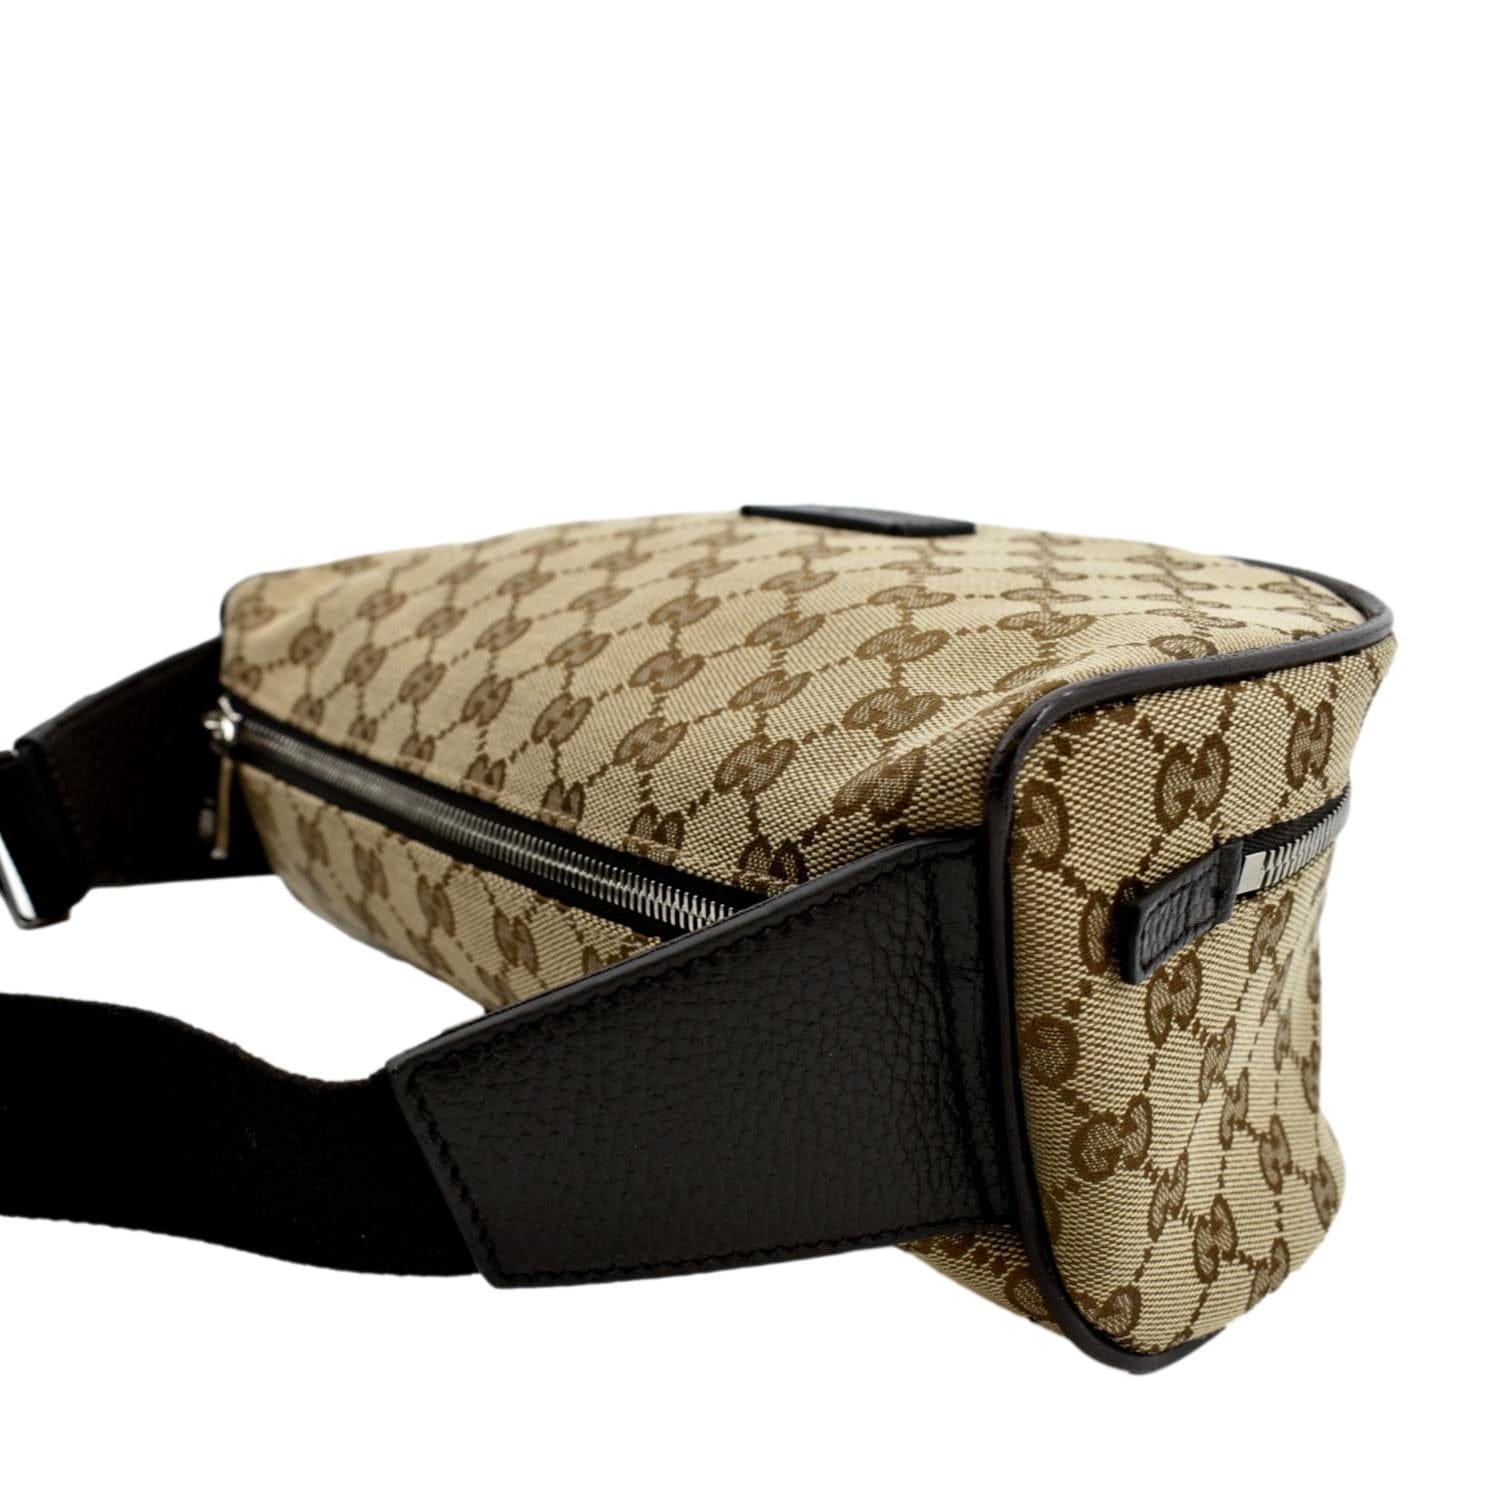 Gucci Belt Bag GG Supreme Web Waist Strap Black/Beige in Canvas